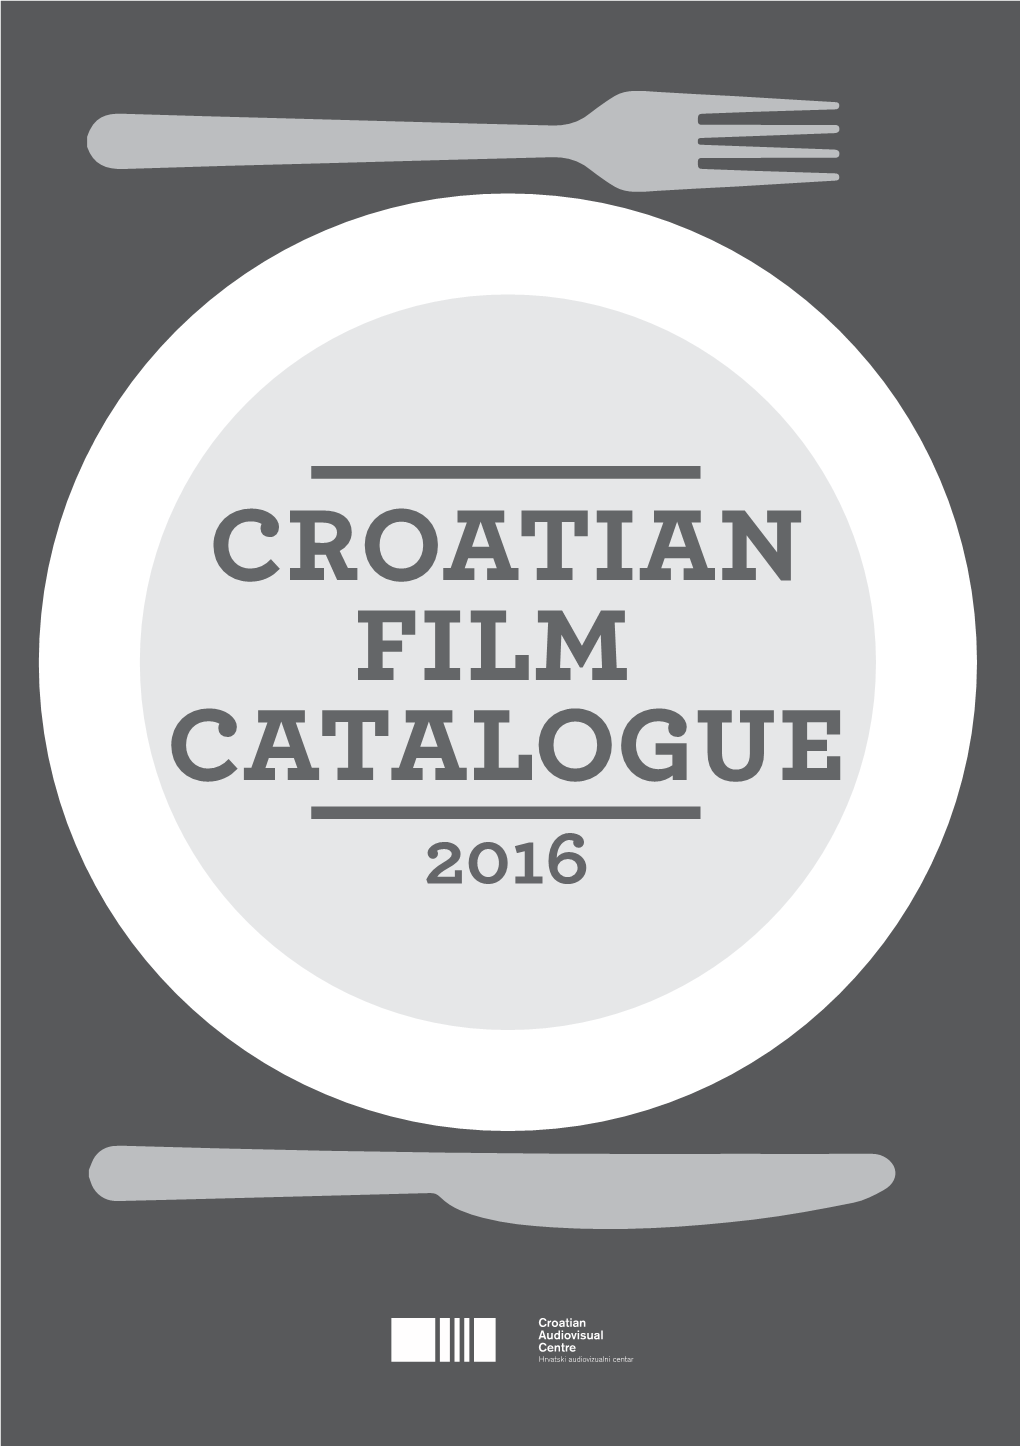 Croatian Film Catalogue 2016